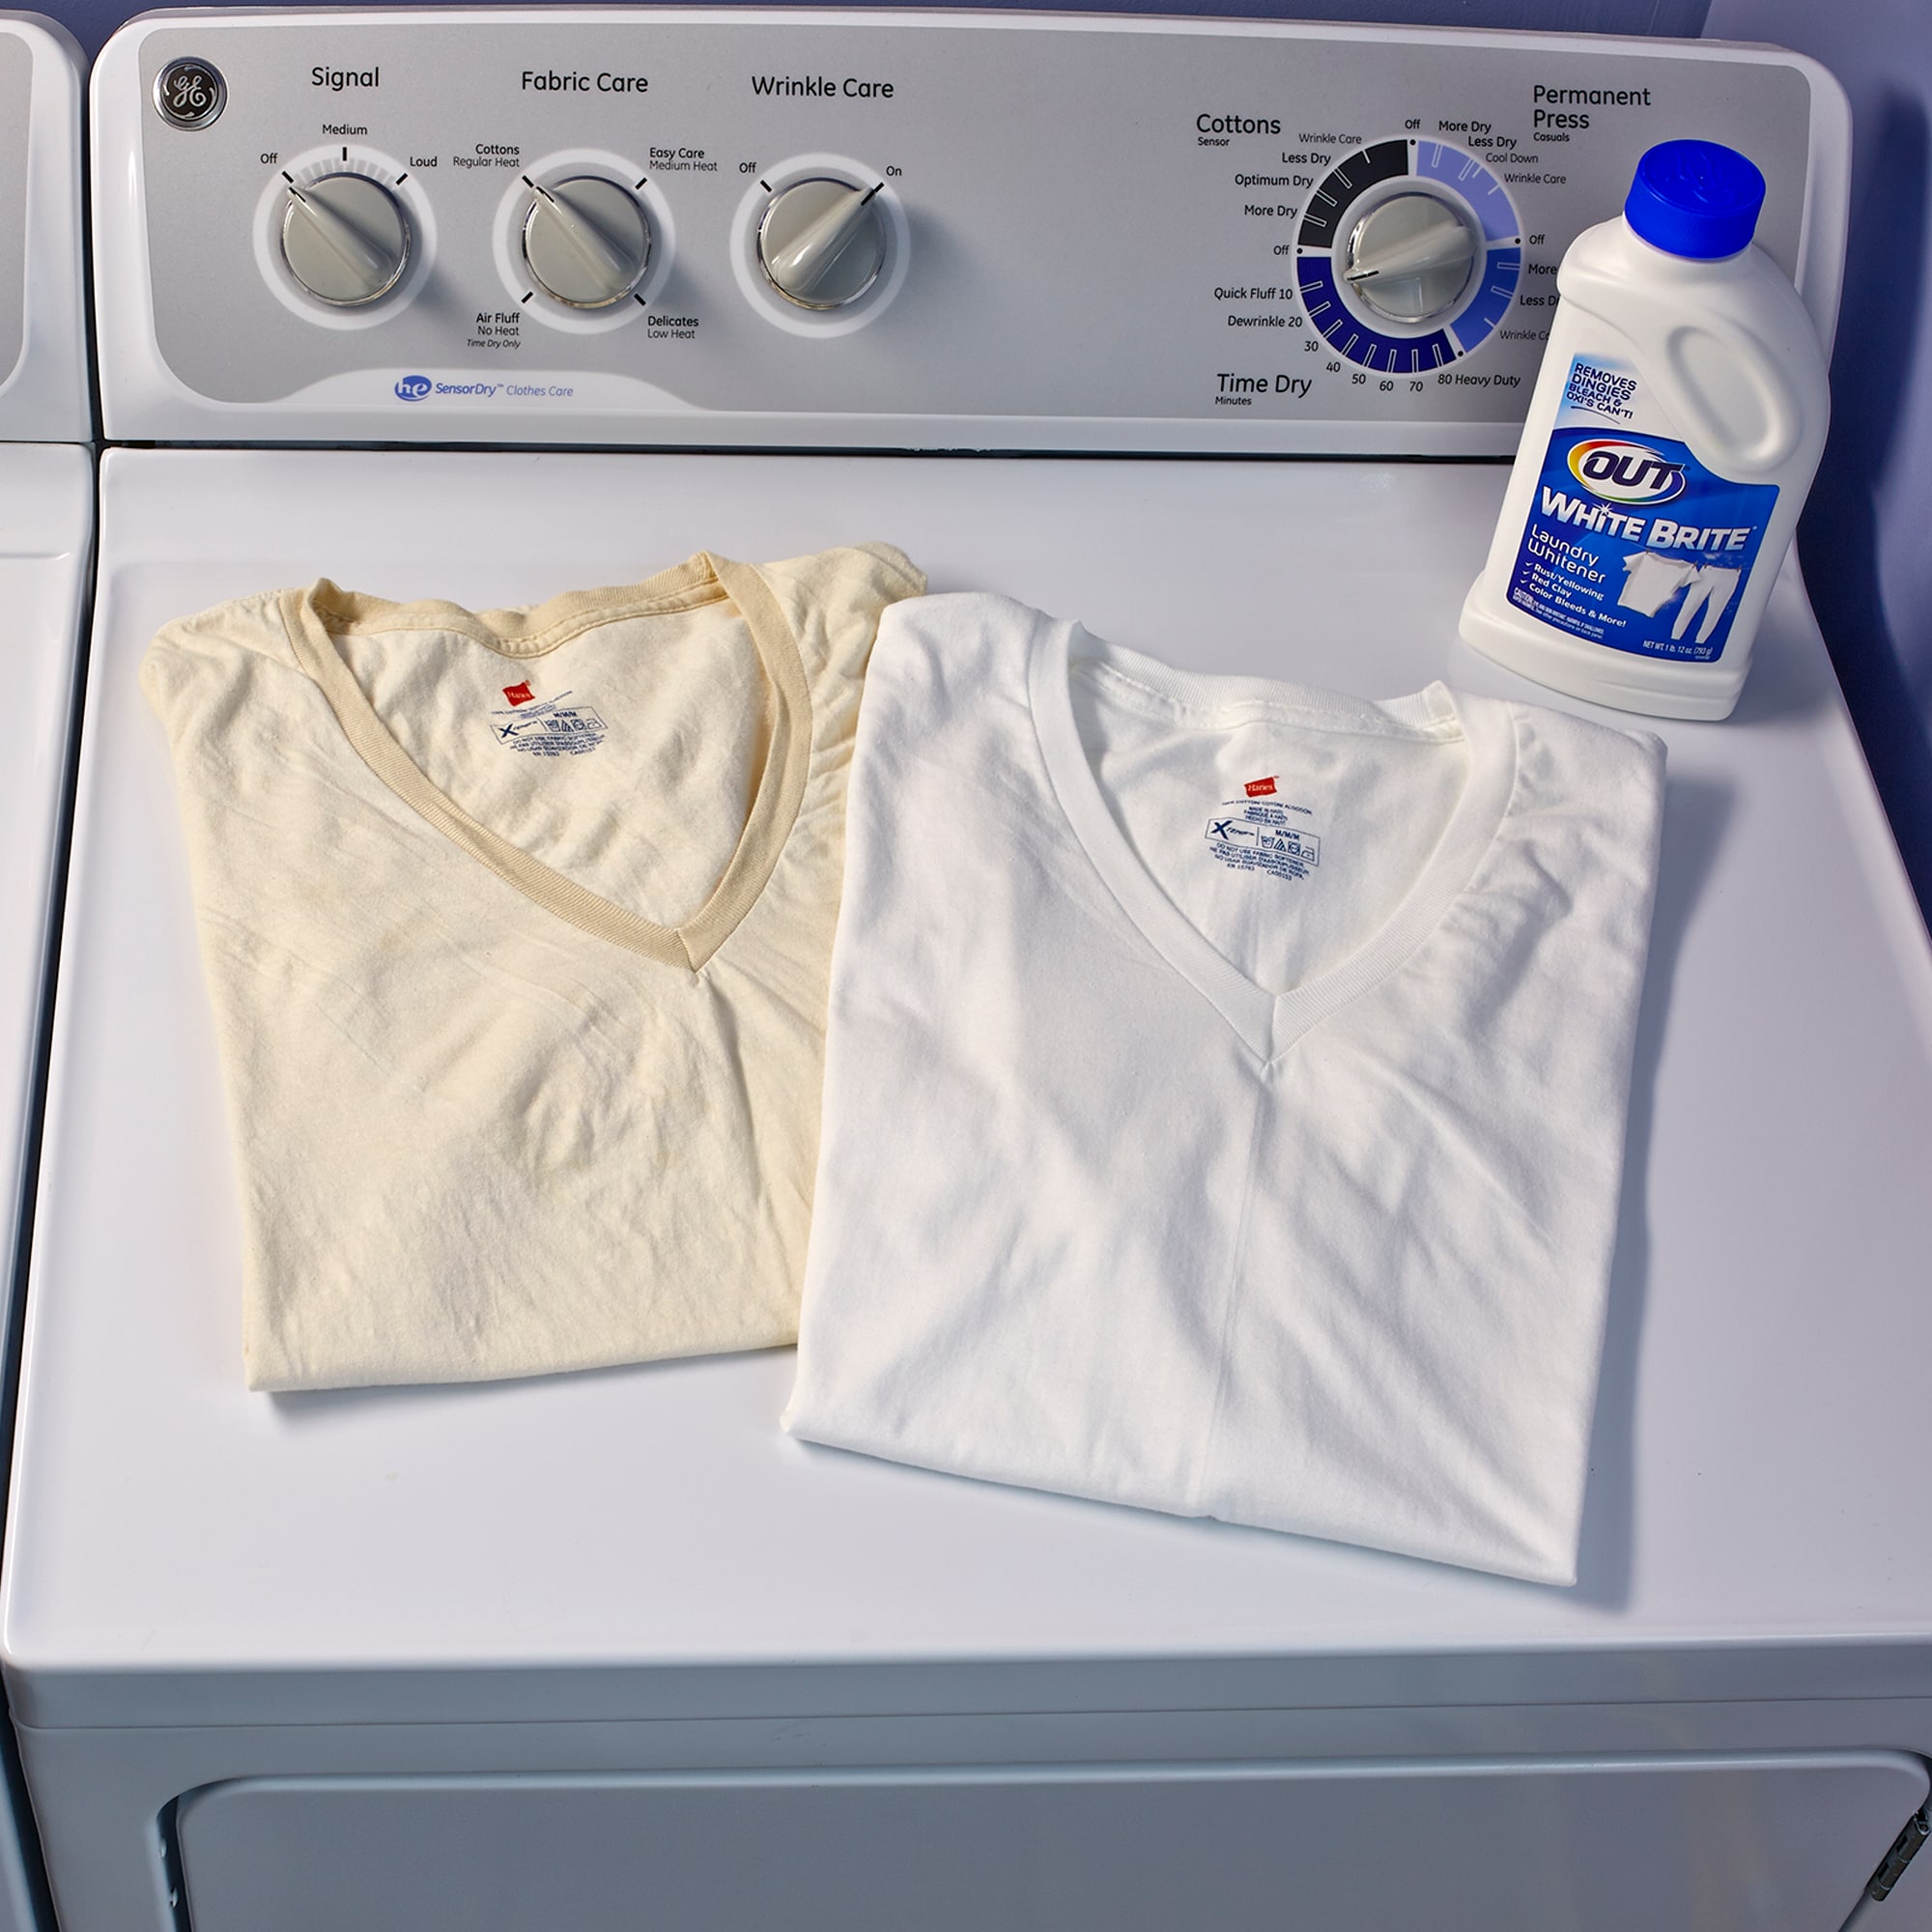  White Brite WB30N 1LB + 12 oz (793 g) White Brite Laundry  Whitener & OUT White Brite Laundry Whitener, 1 lb. 12 oz. Bottle : Health &  Household